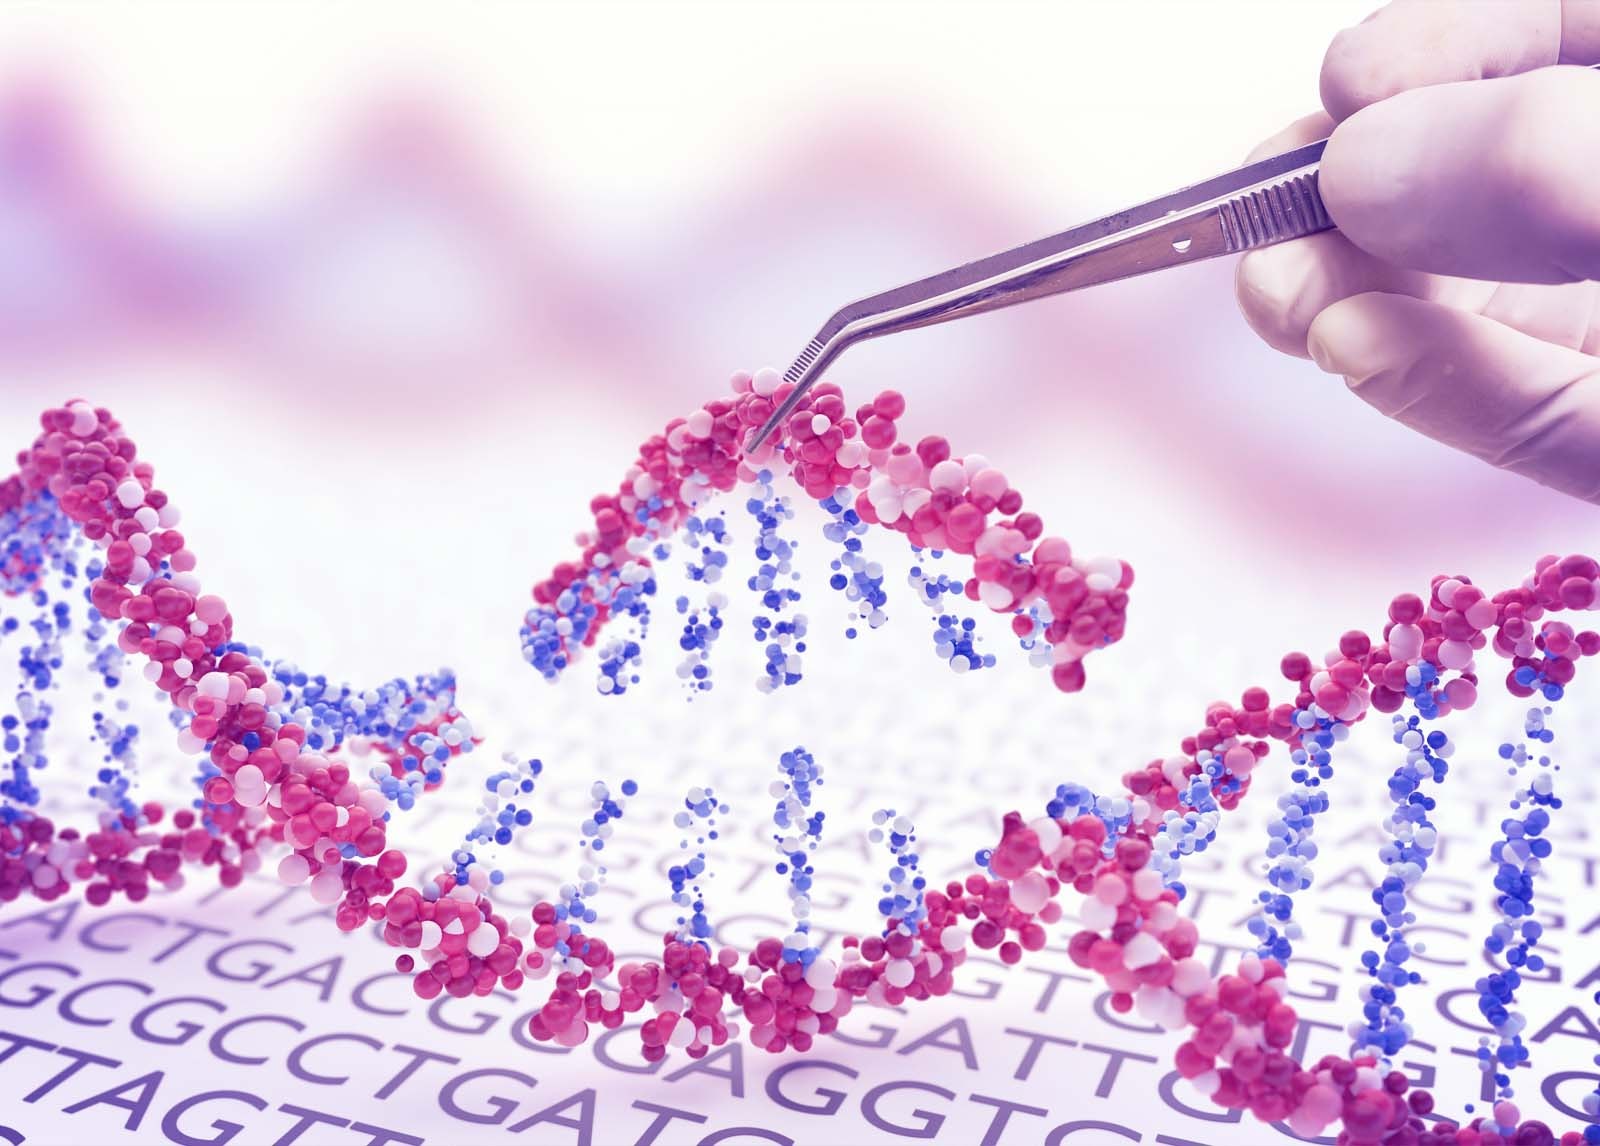 CRISPR-Based Gene Editing Technique Can Insert Entire Genes Into Cells